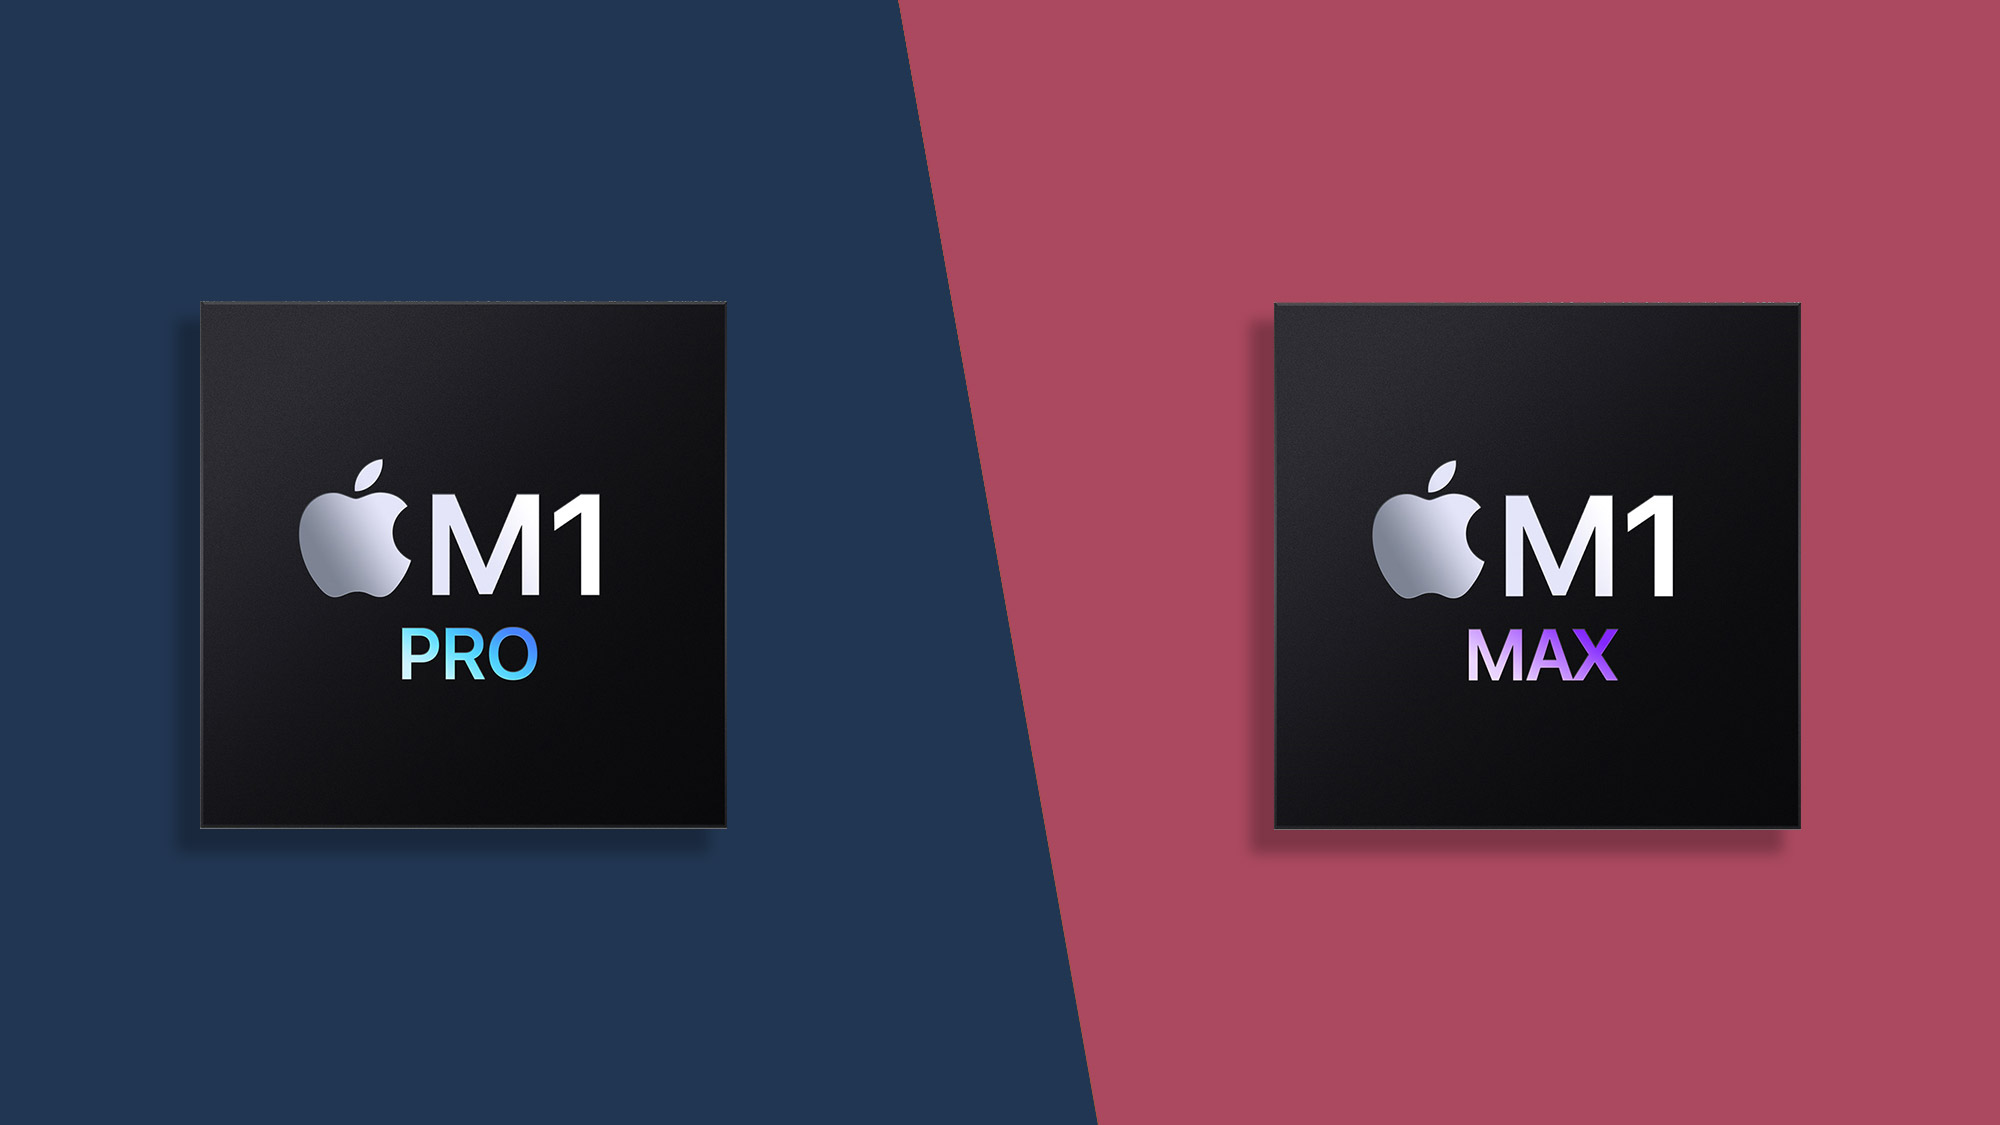 M1 Pro vs M1 Max logos